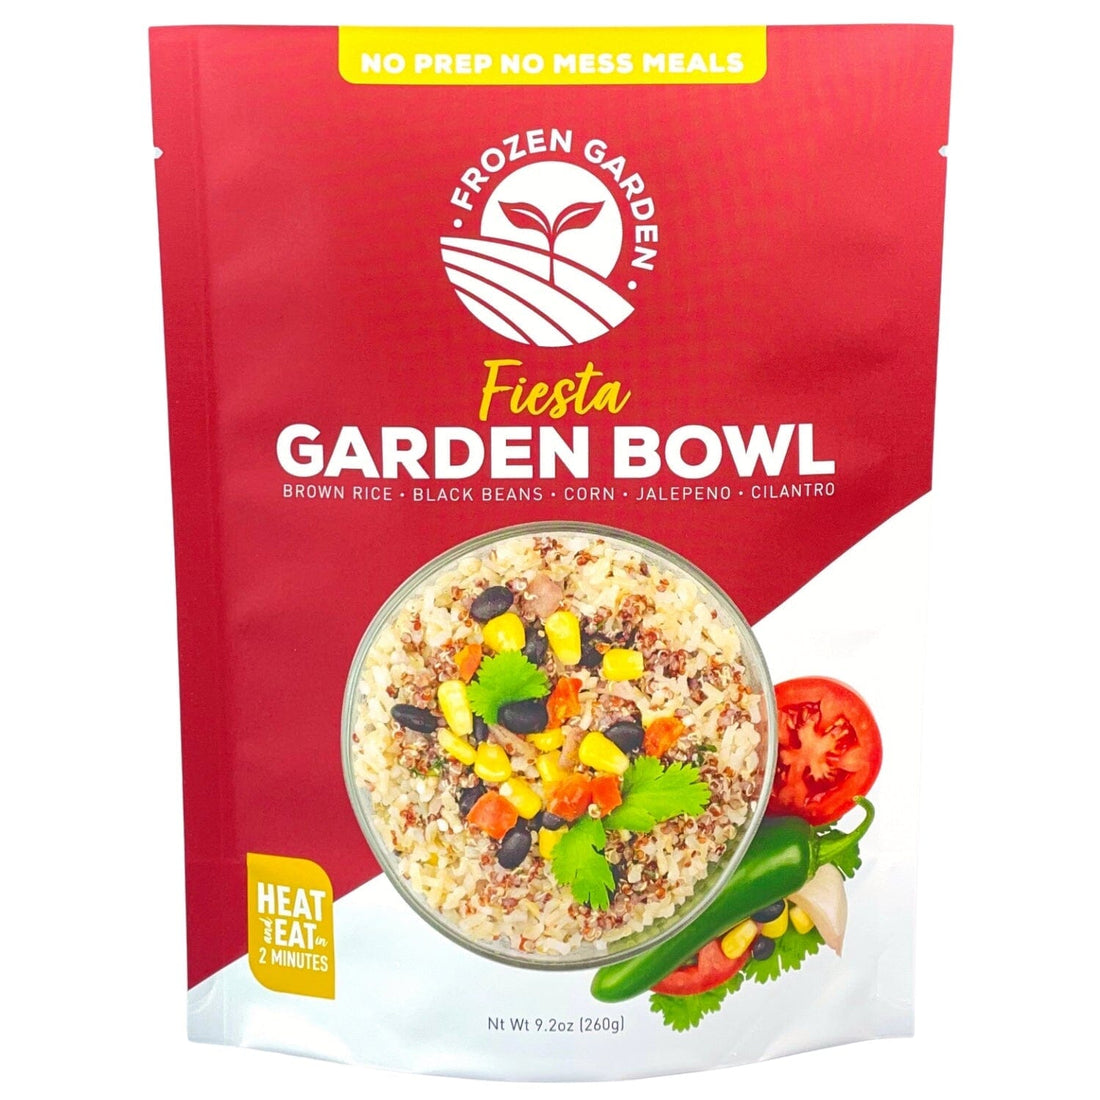 Fiesta Garden Bowl - Frozen Garden - vegan grain bowl - healthy vegan bowls